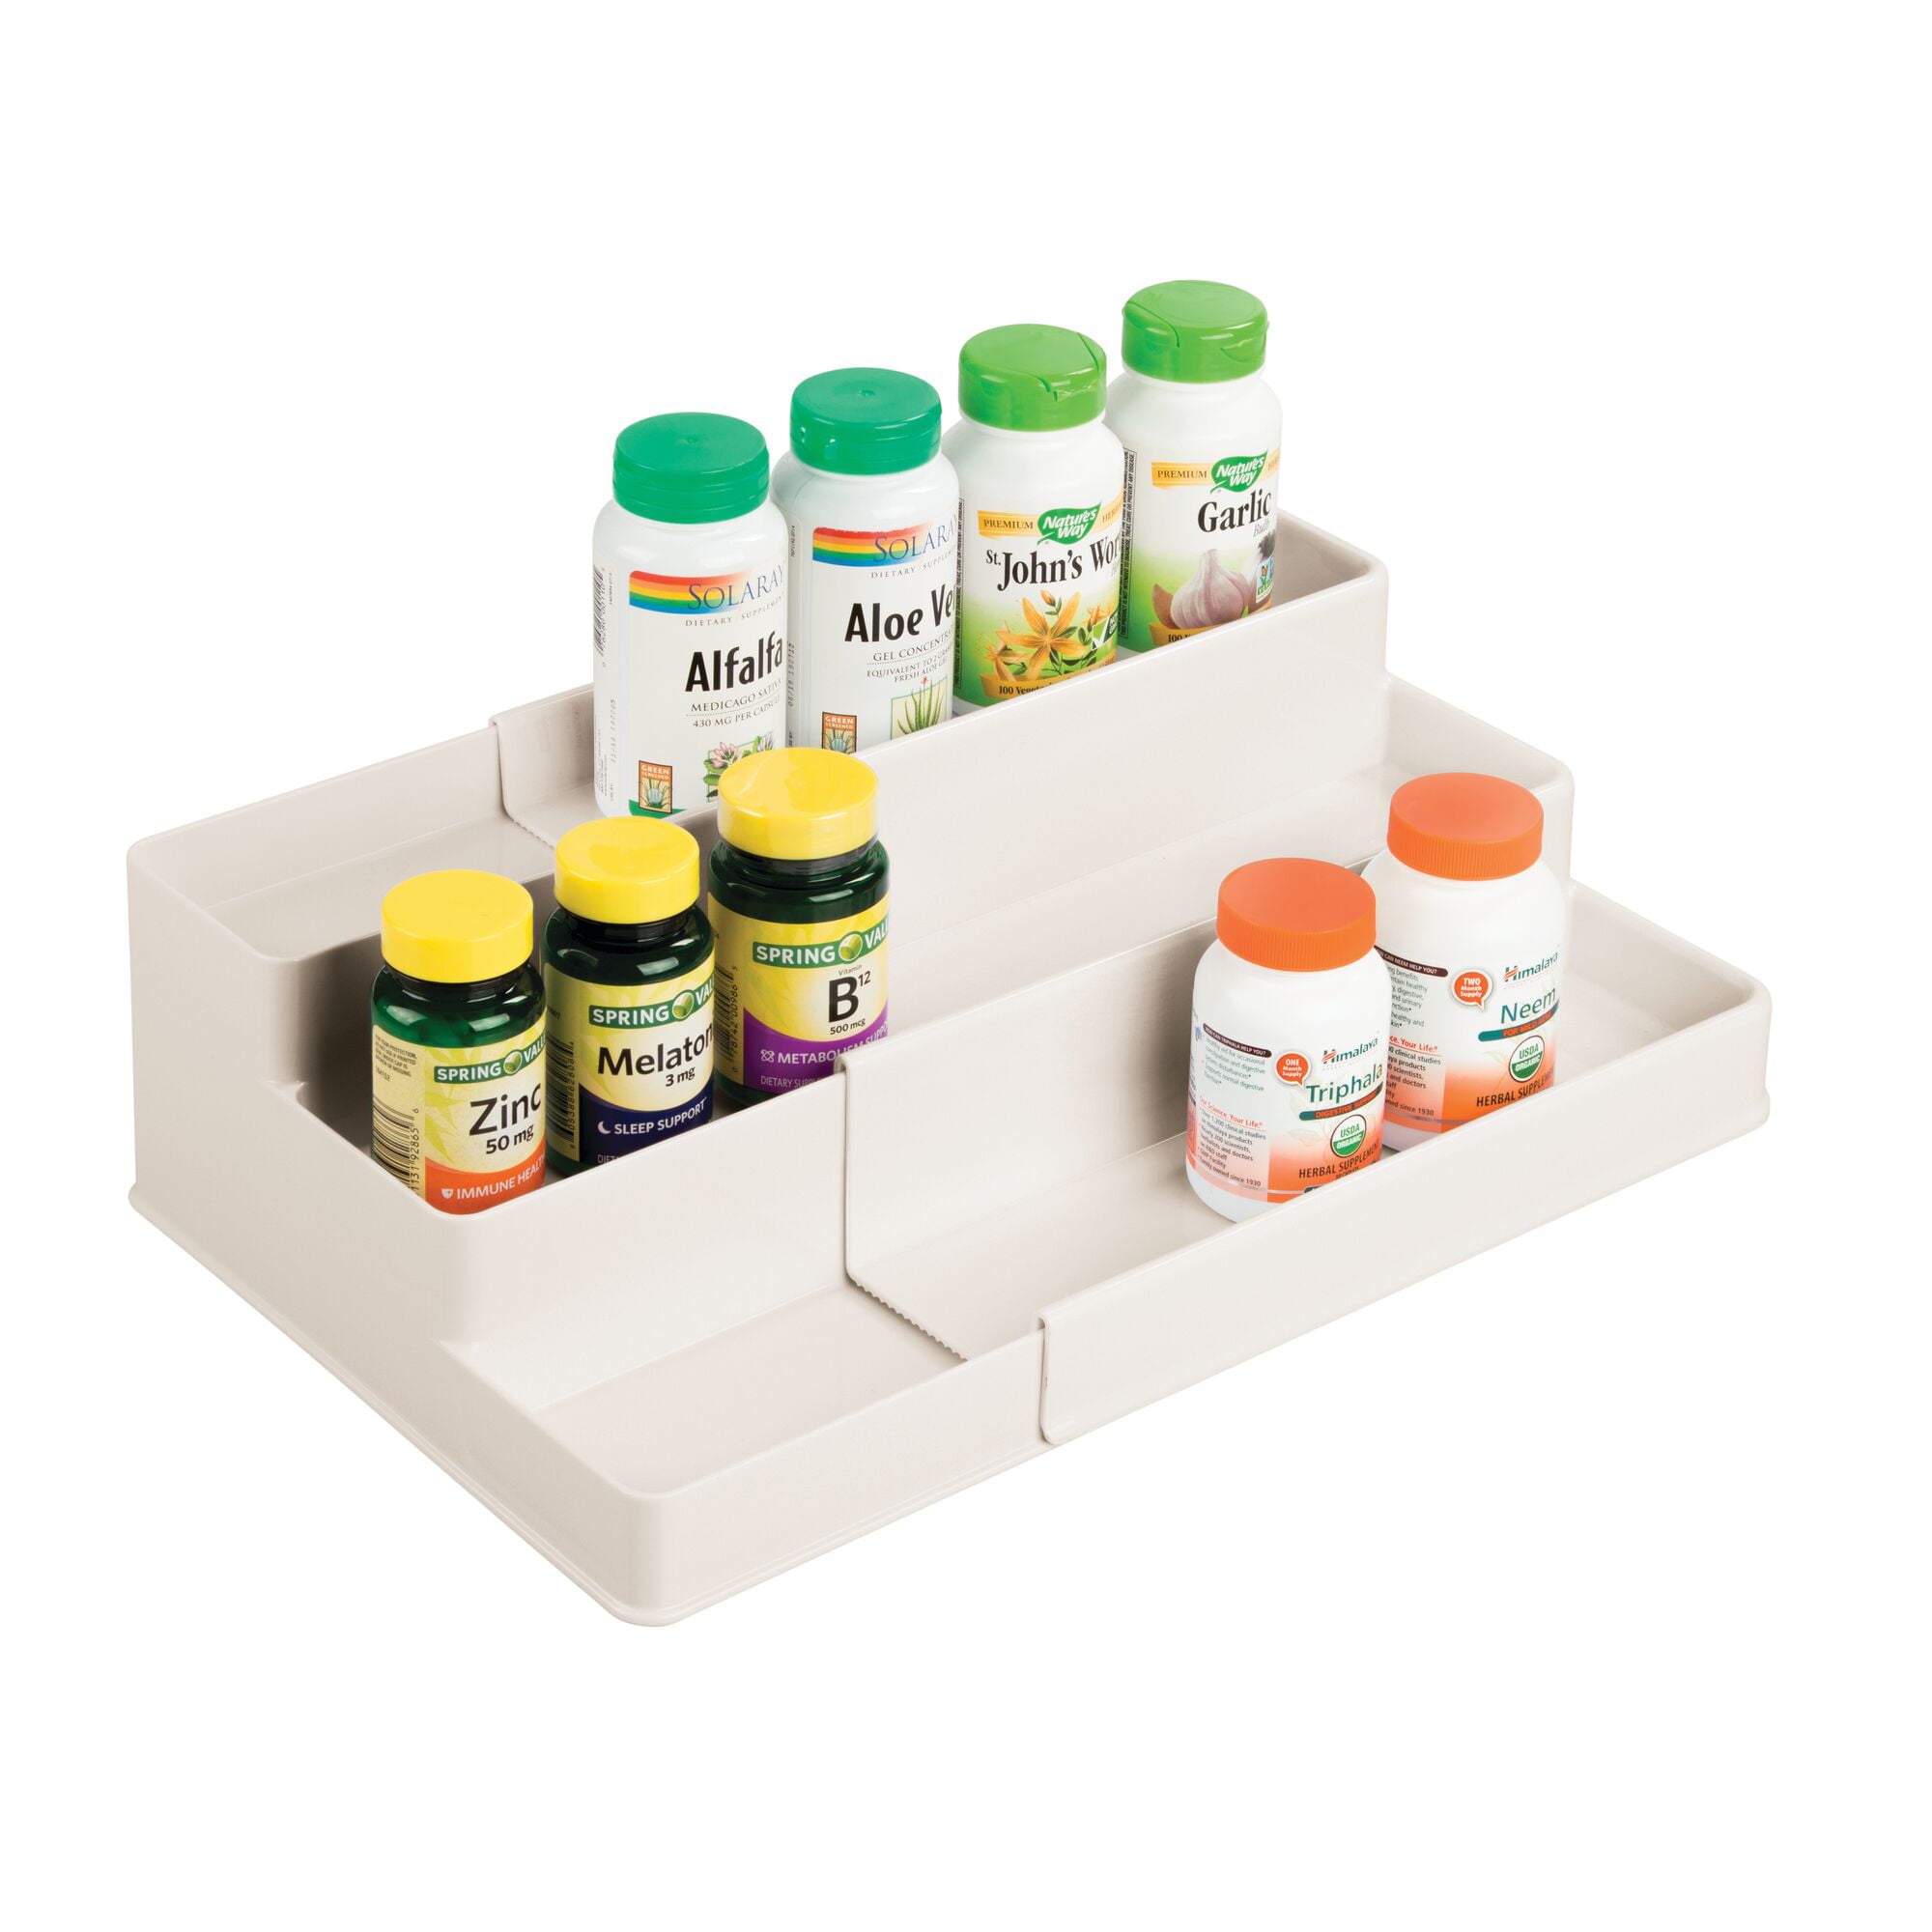 mDesign Plastic Bathroom Storage Organizer Shelf for Cabinet, Vanity, Countertop - Holds Vitamins, Supplements, Medicine Bottles